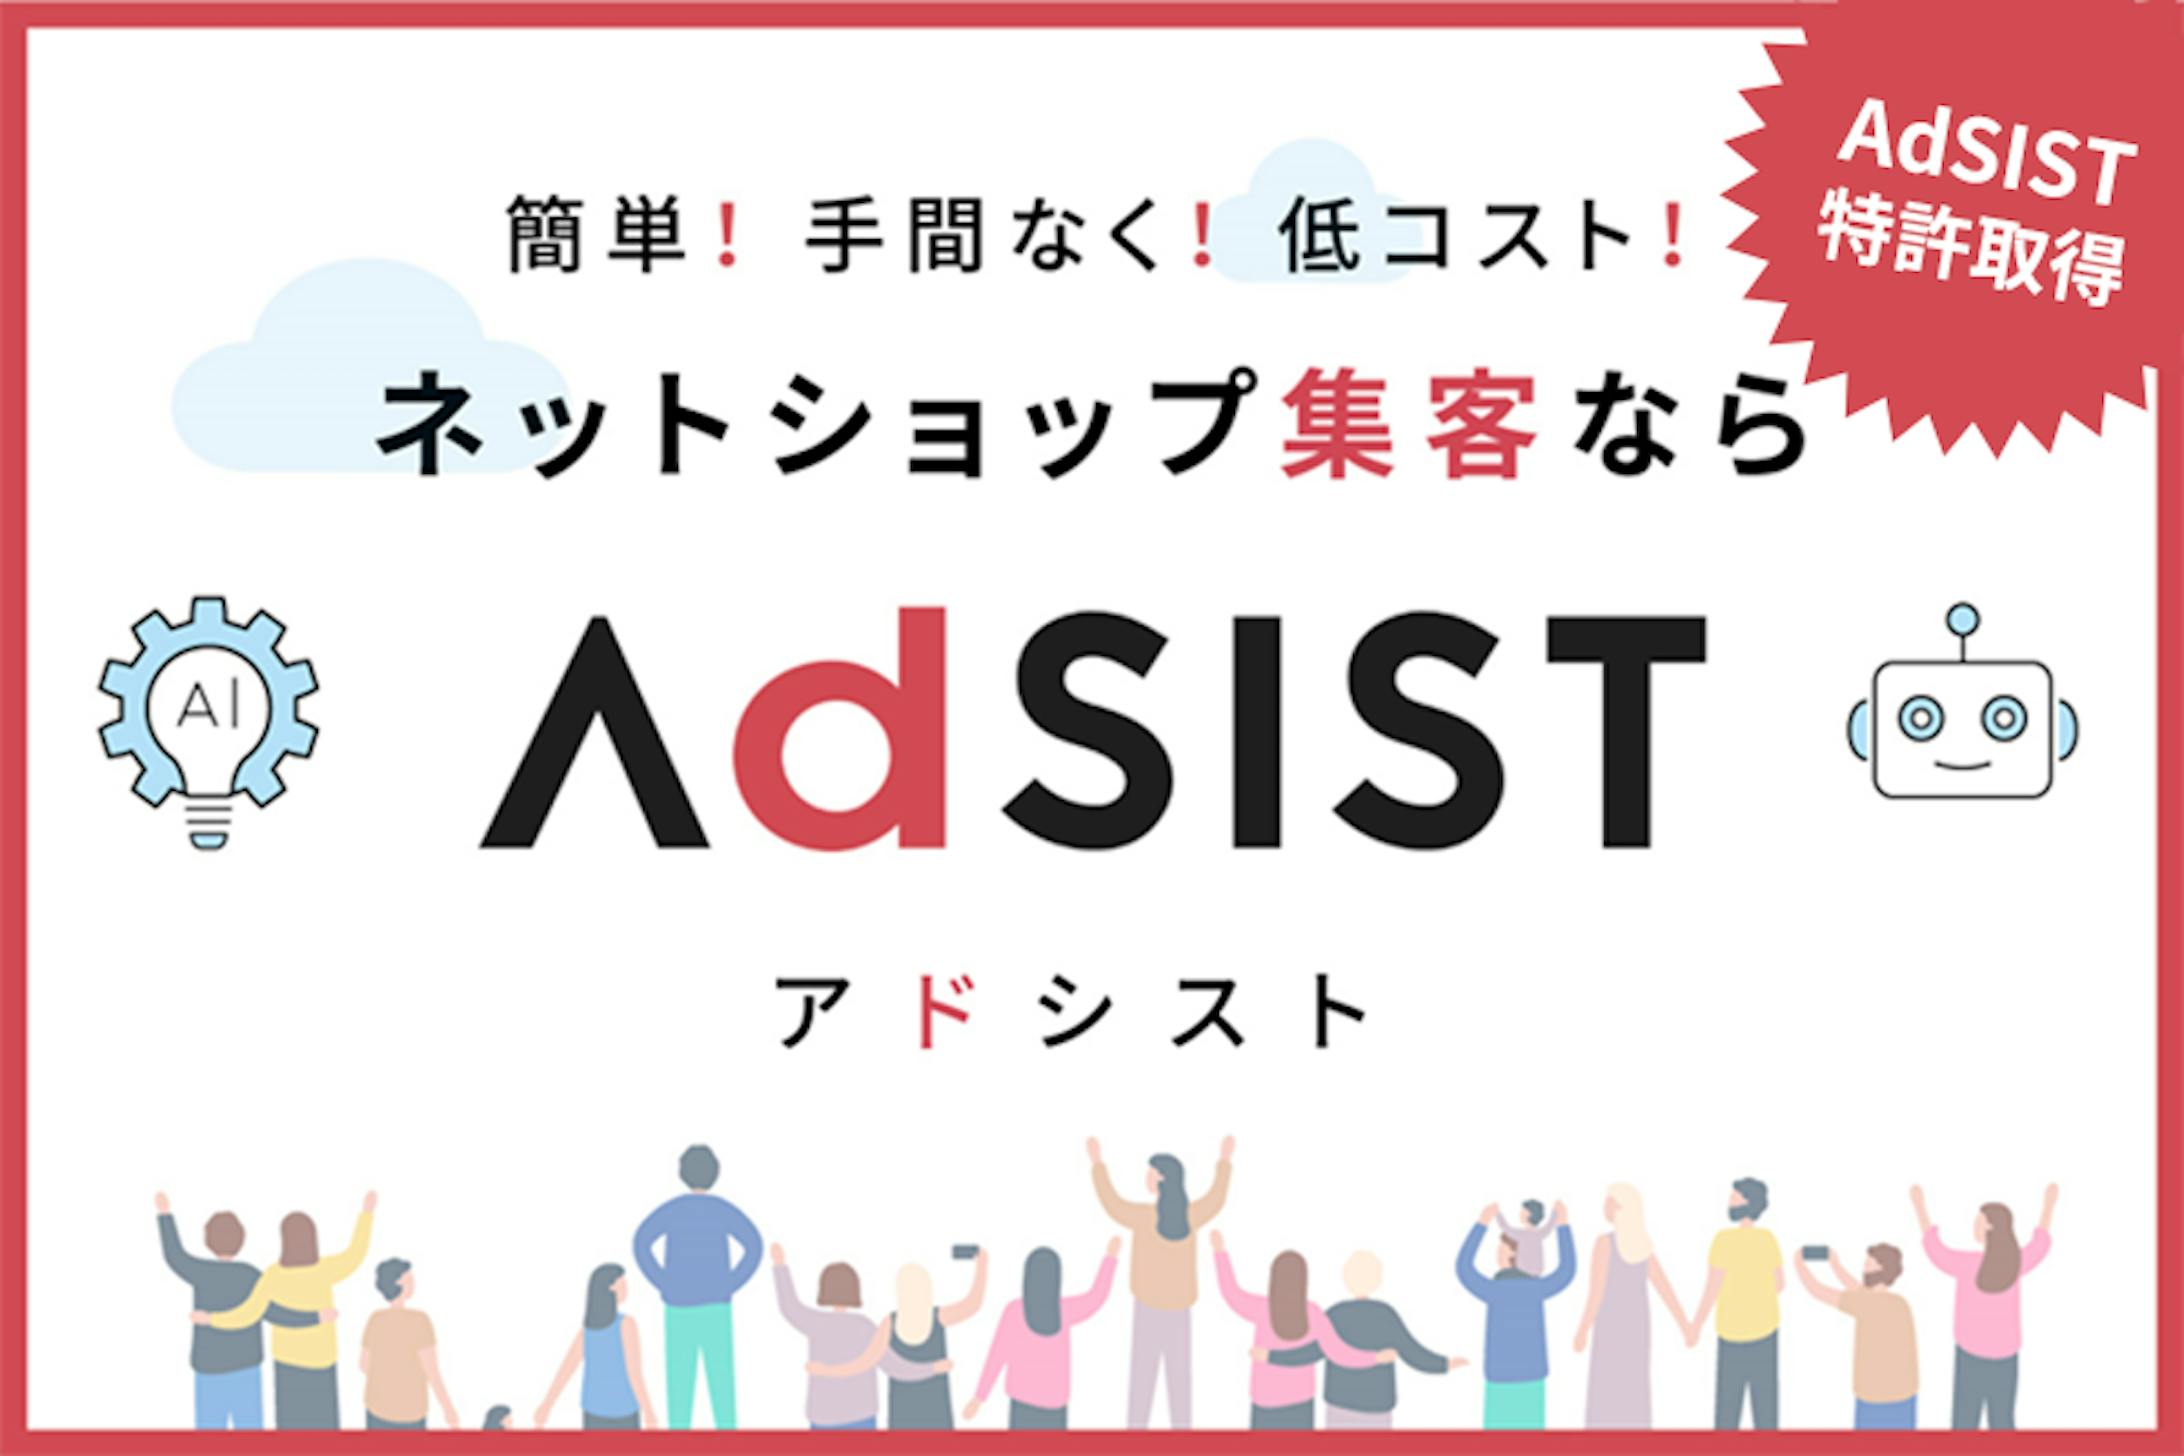 AESIST-自動広告運用サービス--1